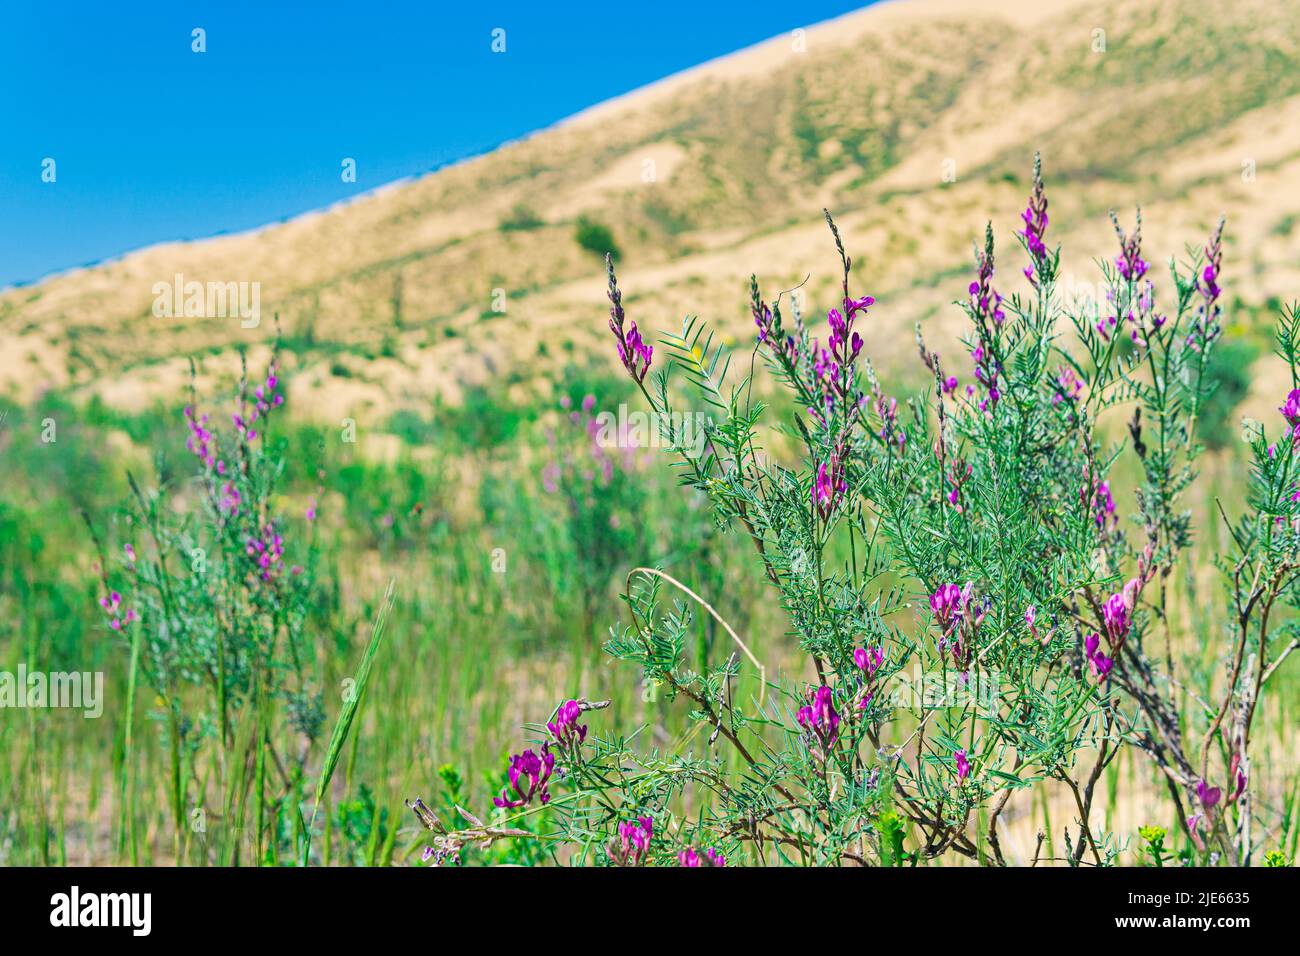 purple astragalus flowers in blooming spring desert, Sarykum sand dune Stock Photo